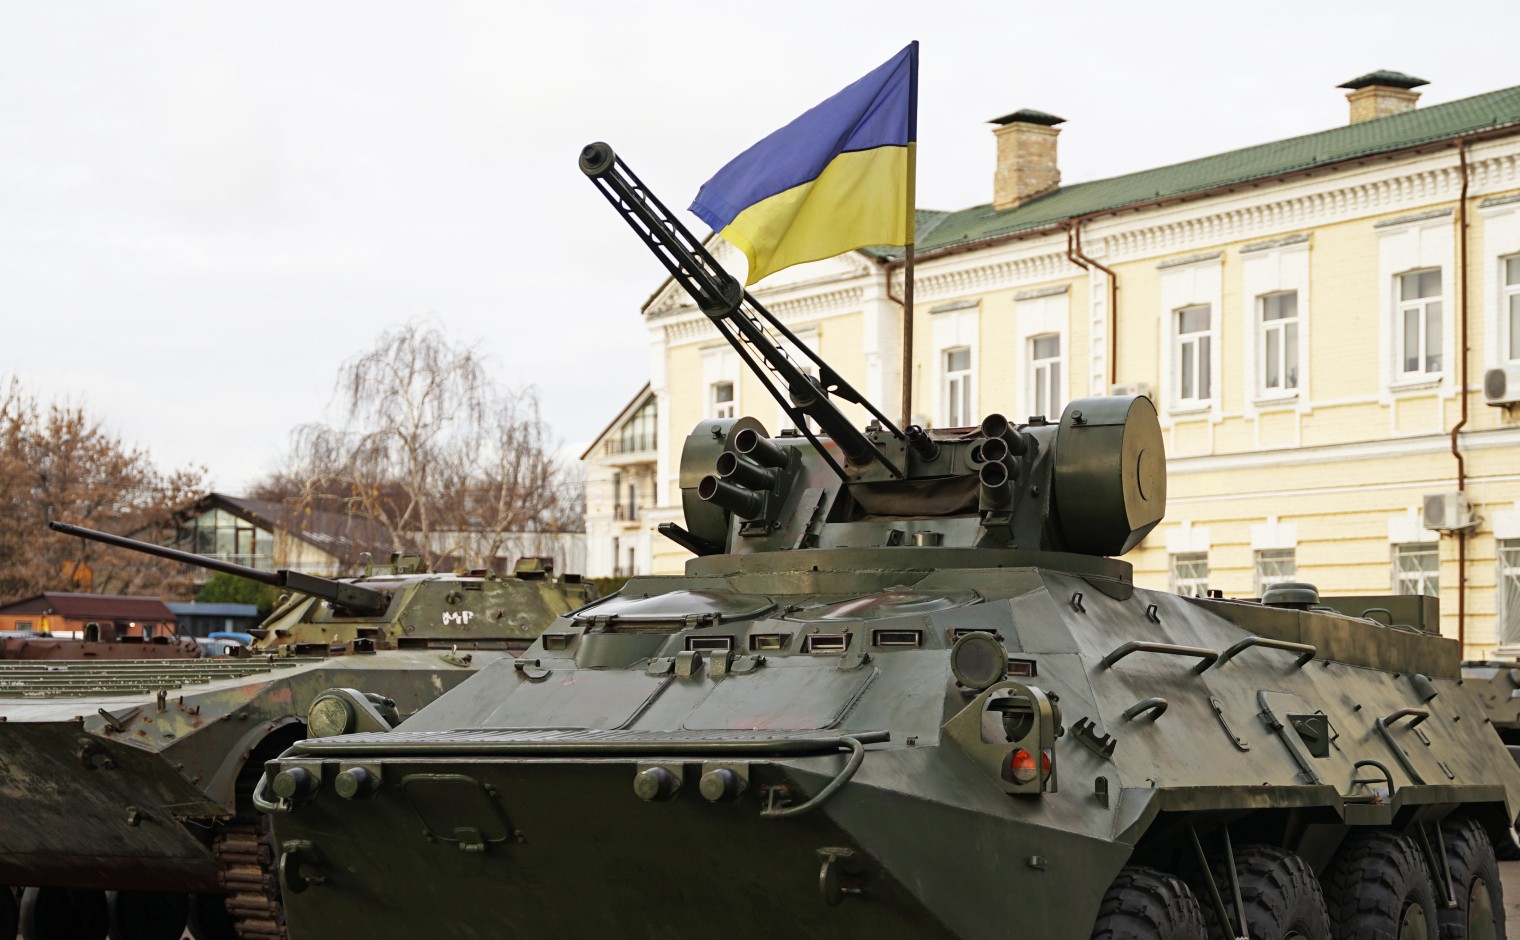 Tank met Oekraïense vlag in de hoofdstad Kiev.